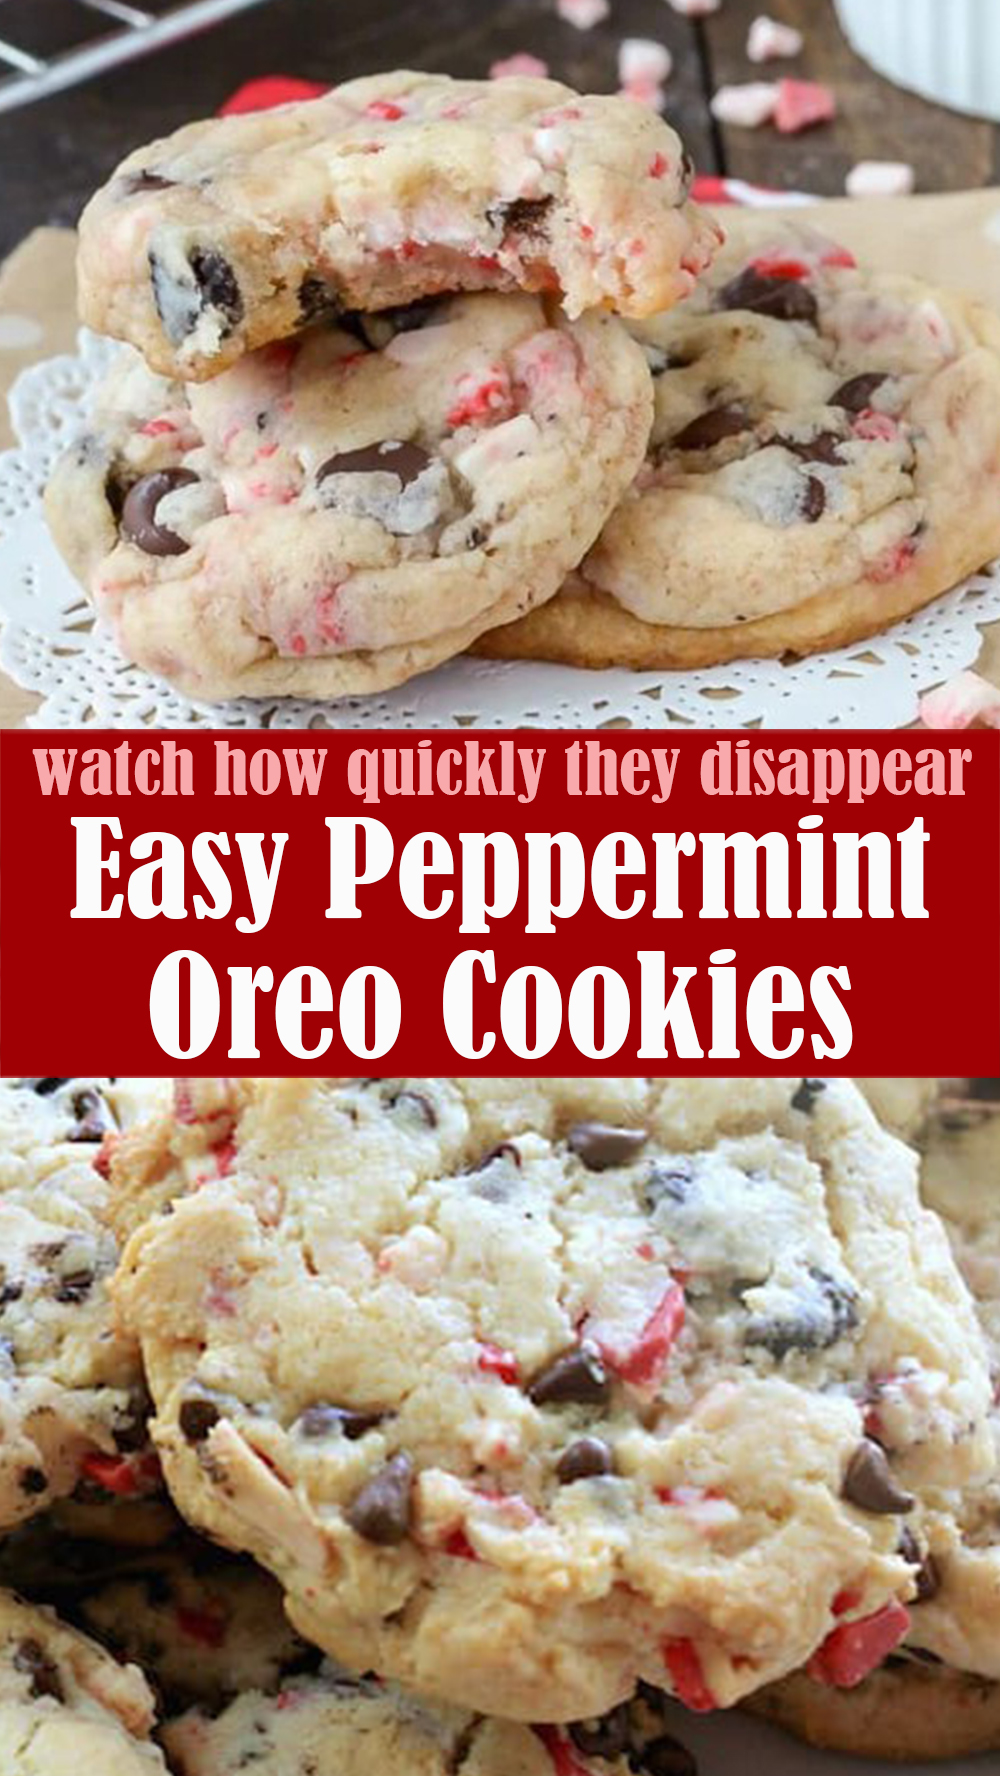 Easy Peppermint Oreo Cookies